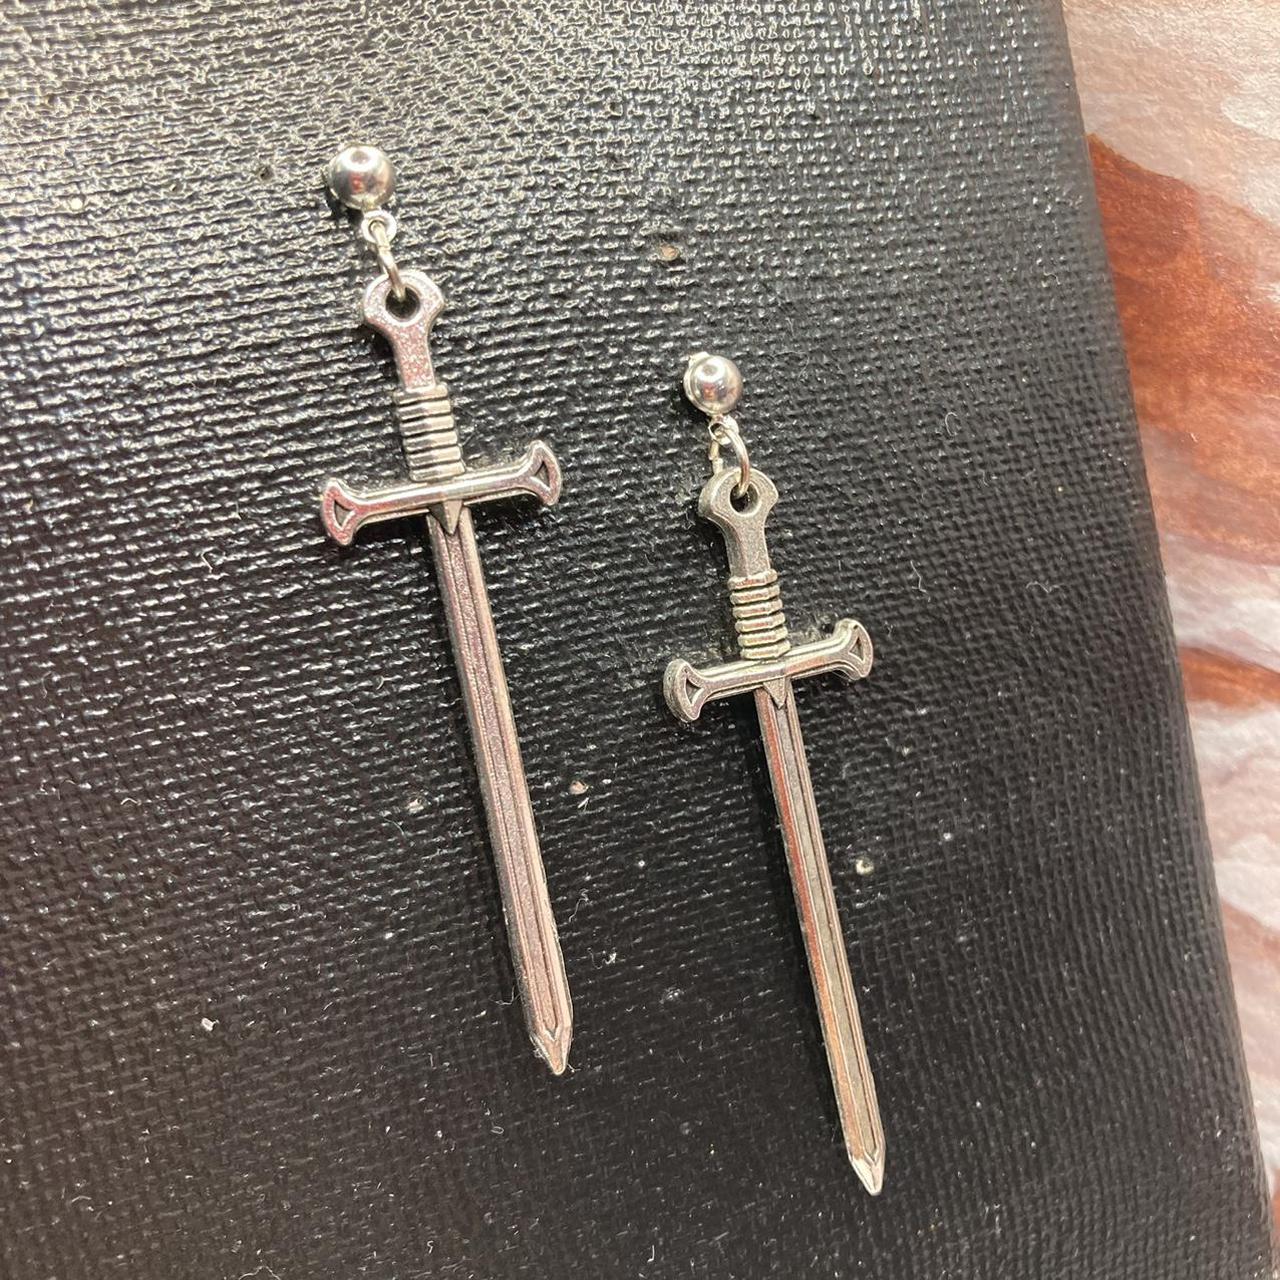 Product Image 1 - Silver short swords stud earrings!🔥

☀️$8☀️